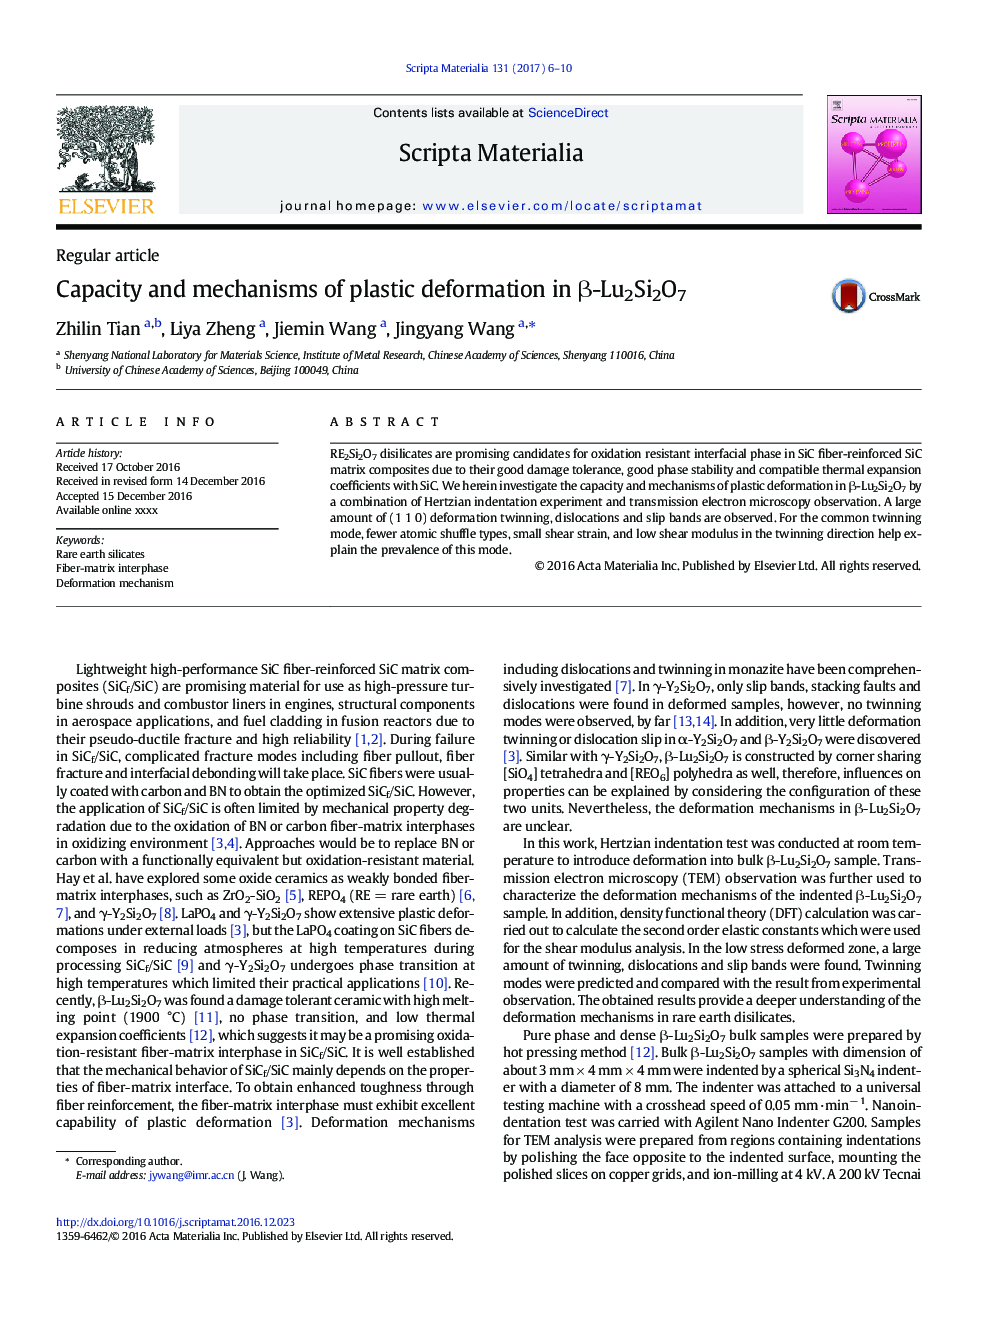 Capacity and mechanisms of plastic deformation in Î²-Lu2Si2O7